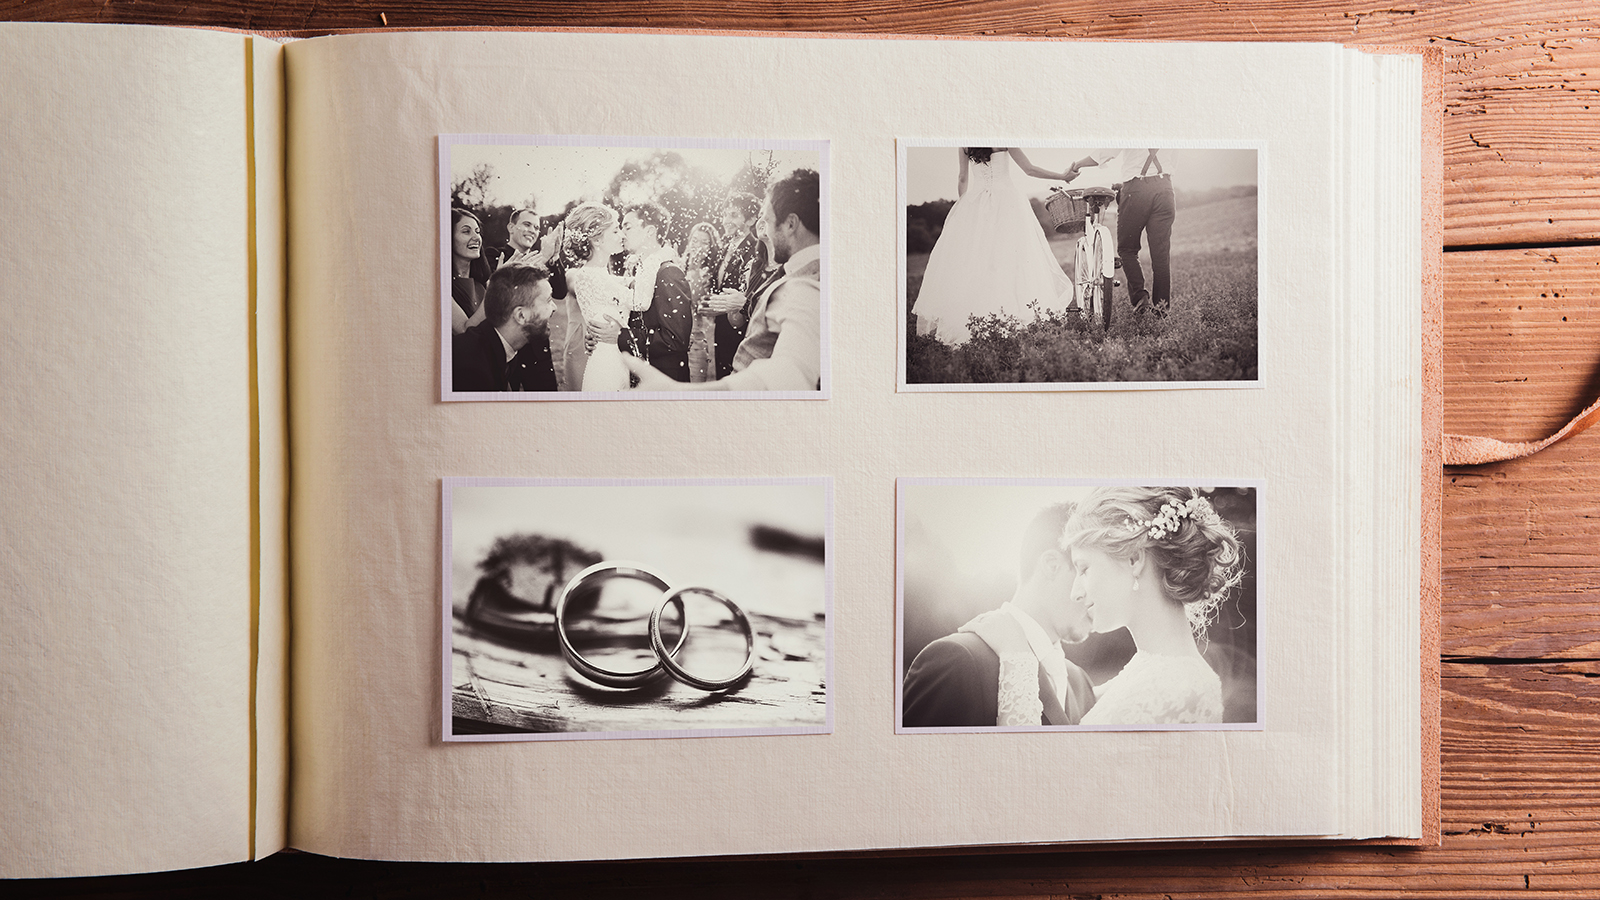 Wedding photos in album. Studio shot on wooden background.